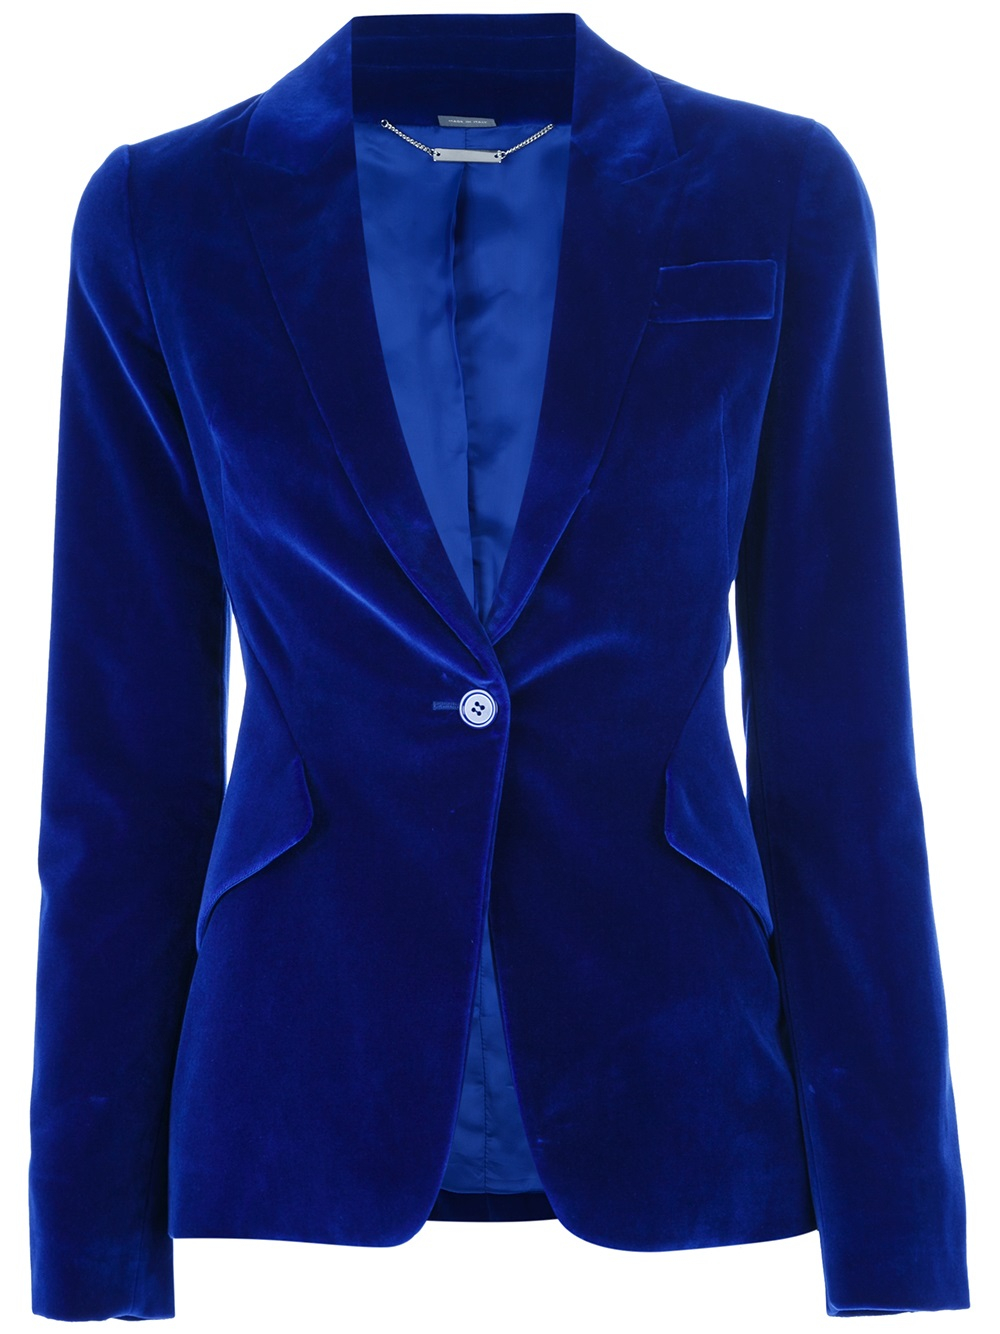 Lyst - Alexander McQueen Velvet Blazer in Blue